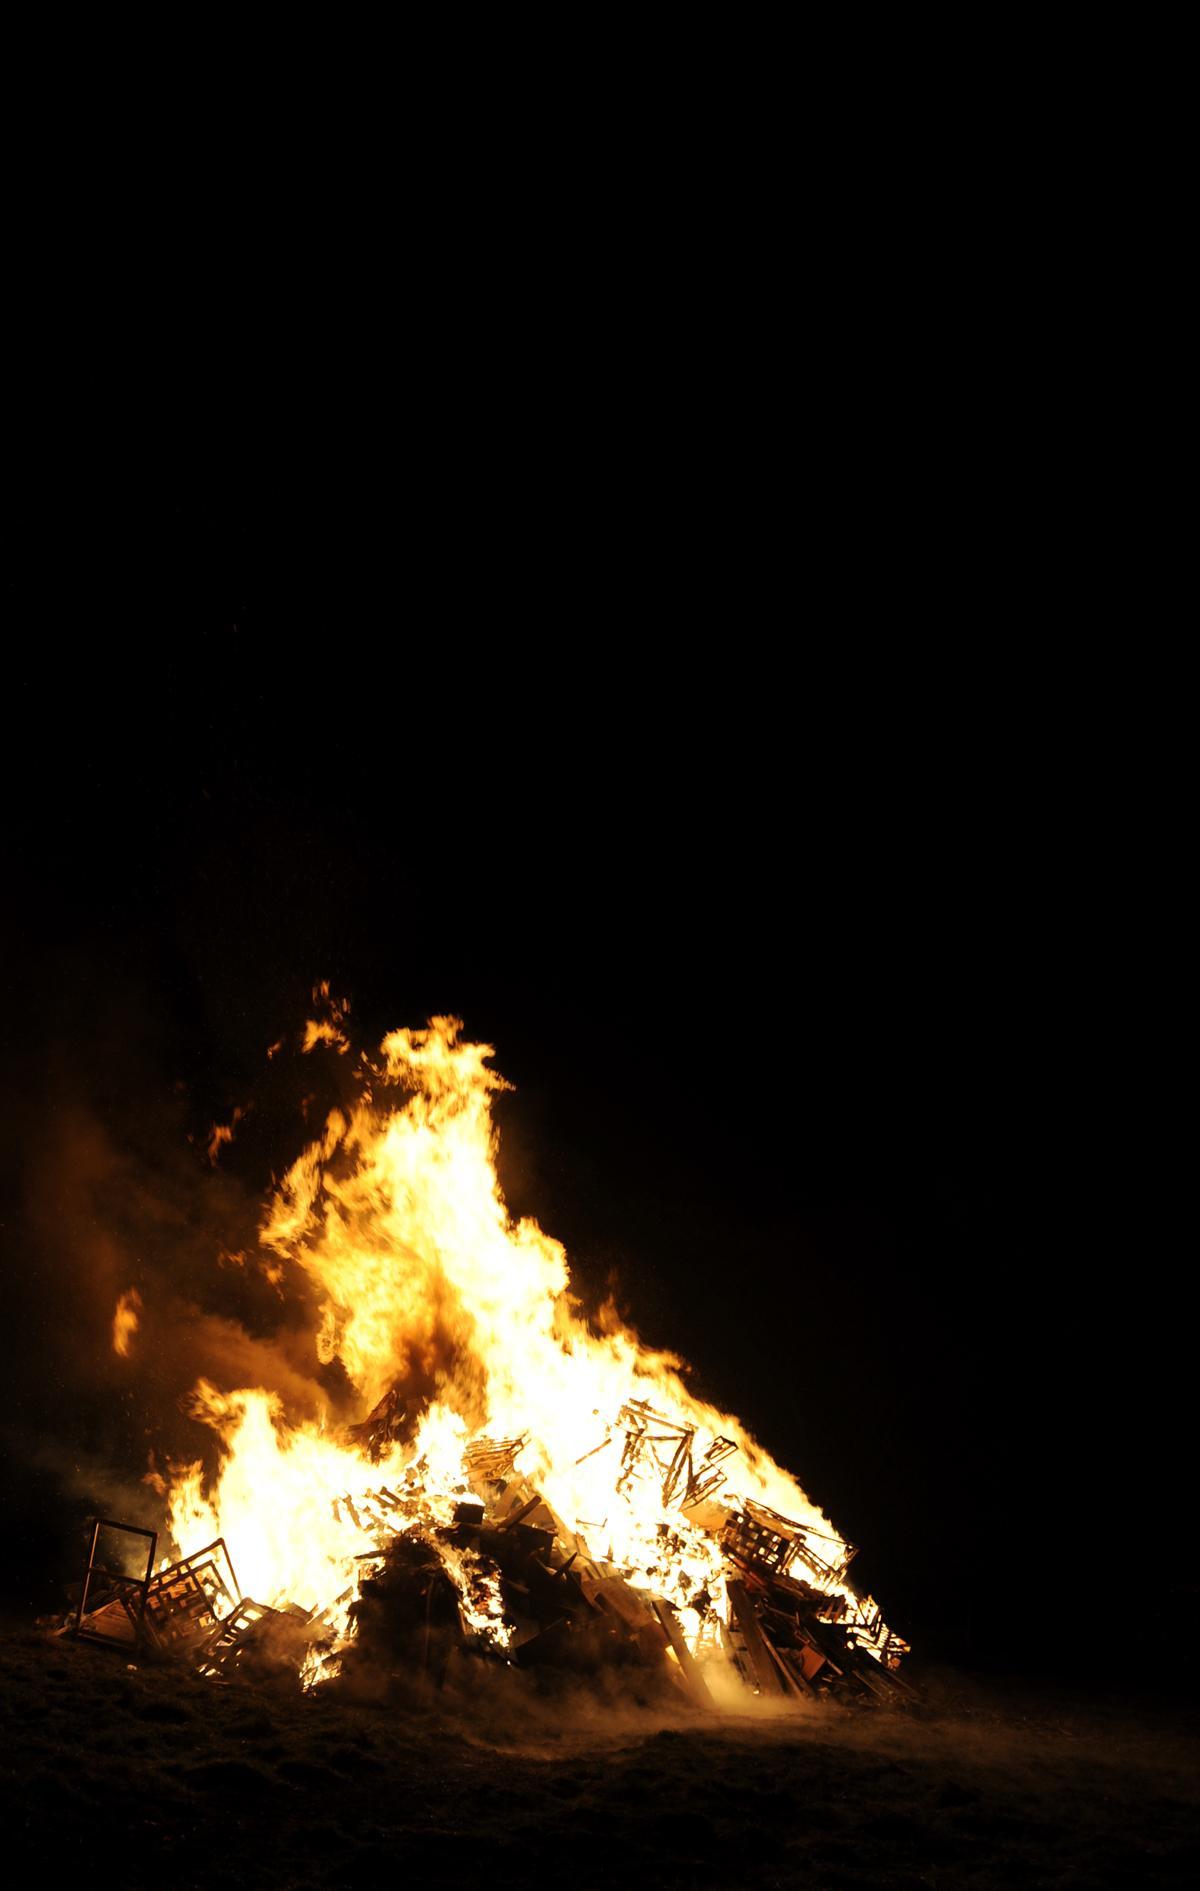 Bonfire night at Towneley Park, Burnley.